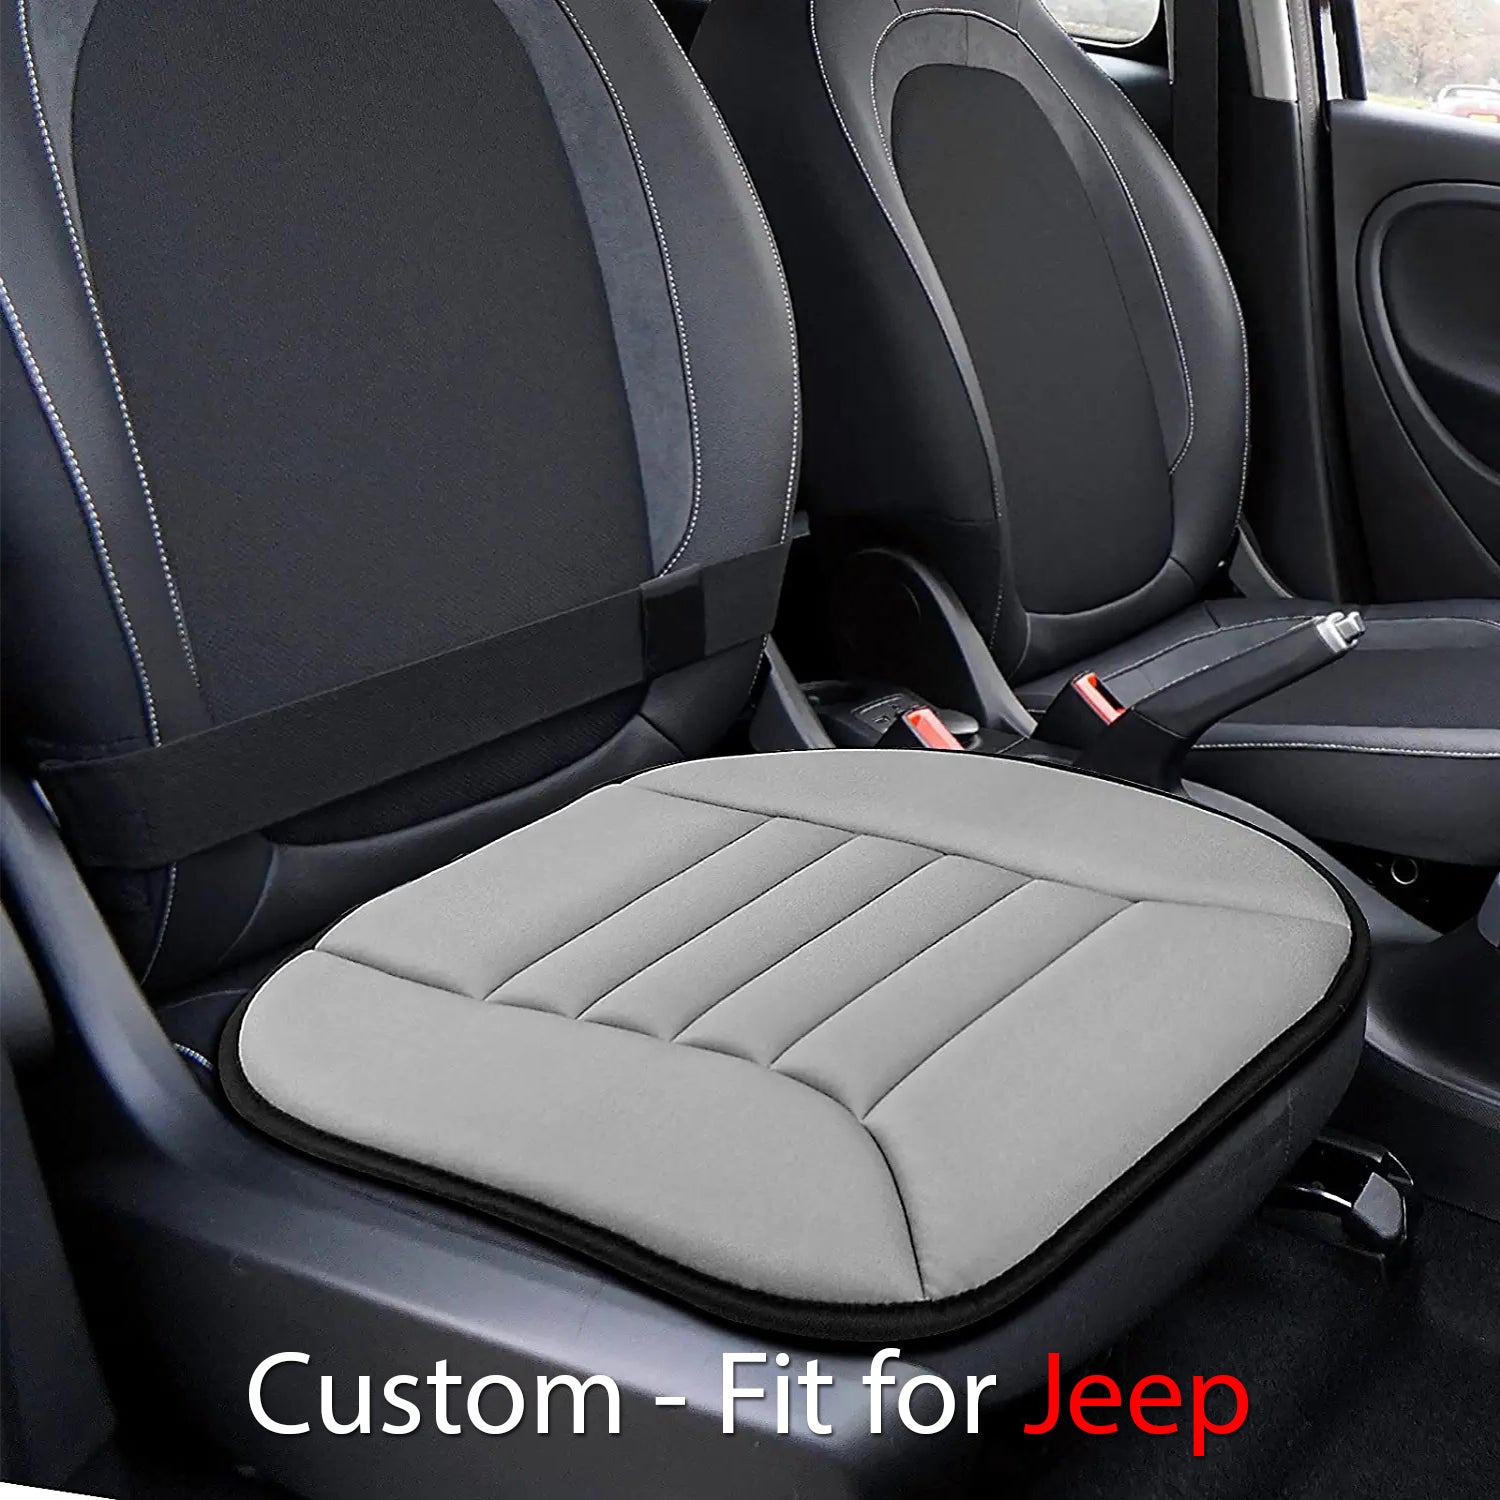 Car Seat Cushion with 1.2inch Comfort Memory Foam, Custom-Fit For Car, Seat Cushion for Car and Office Chair DLJE247